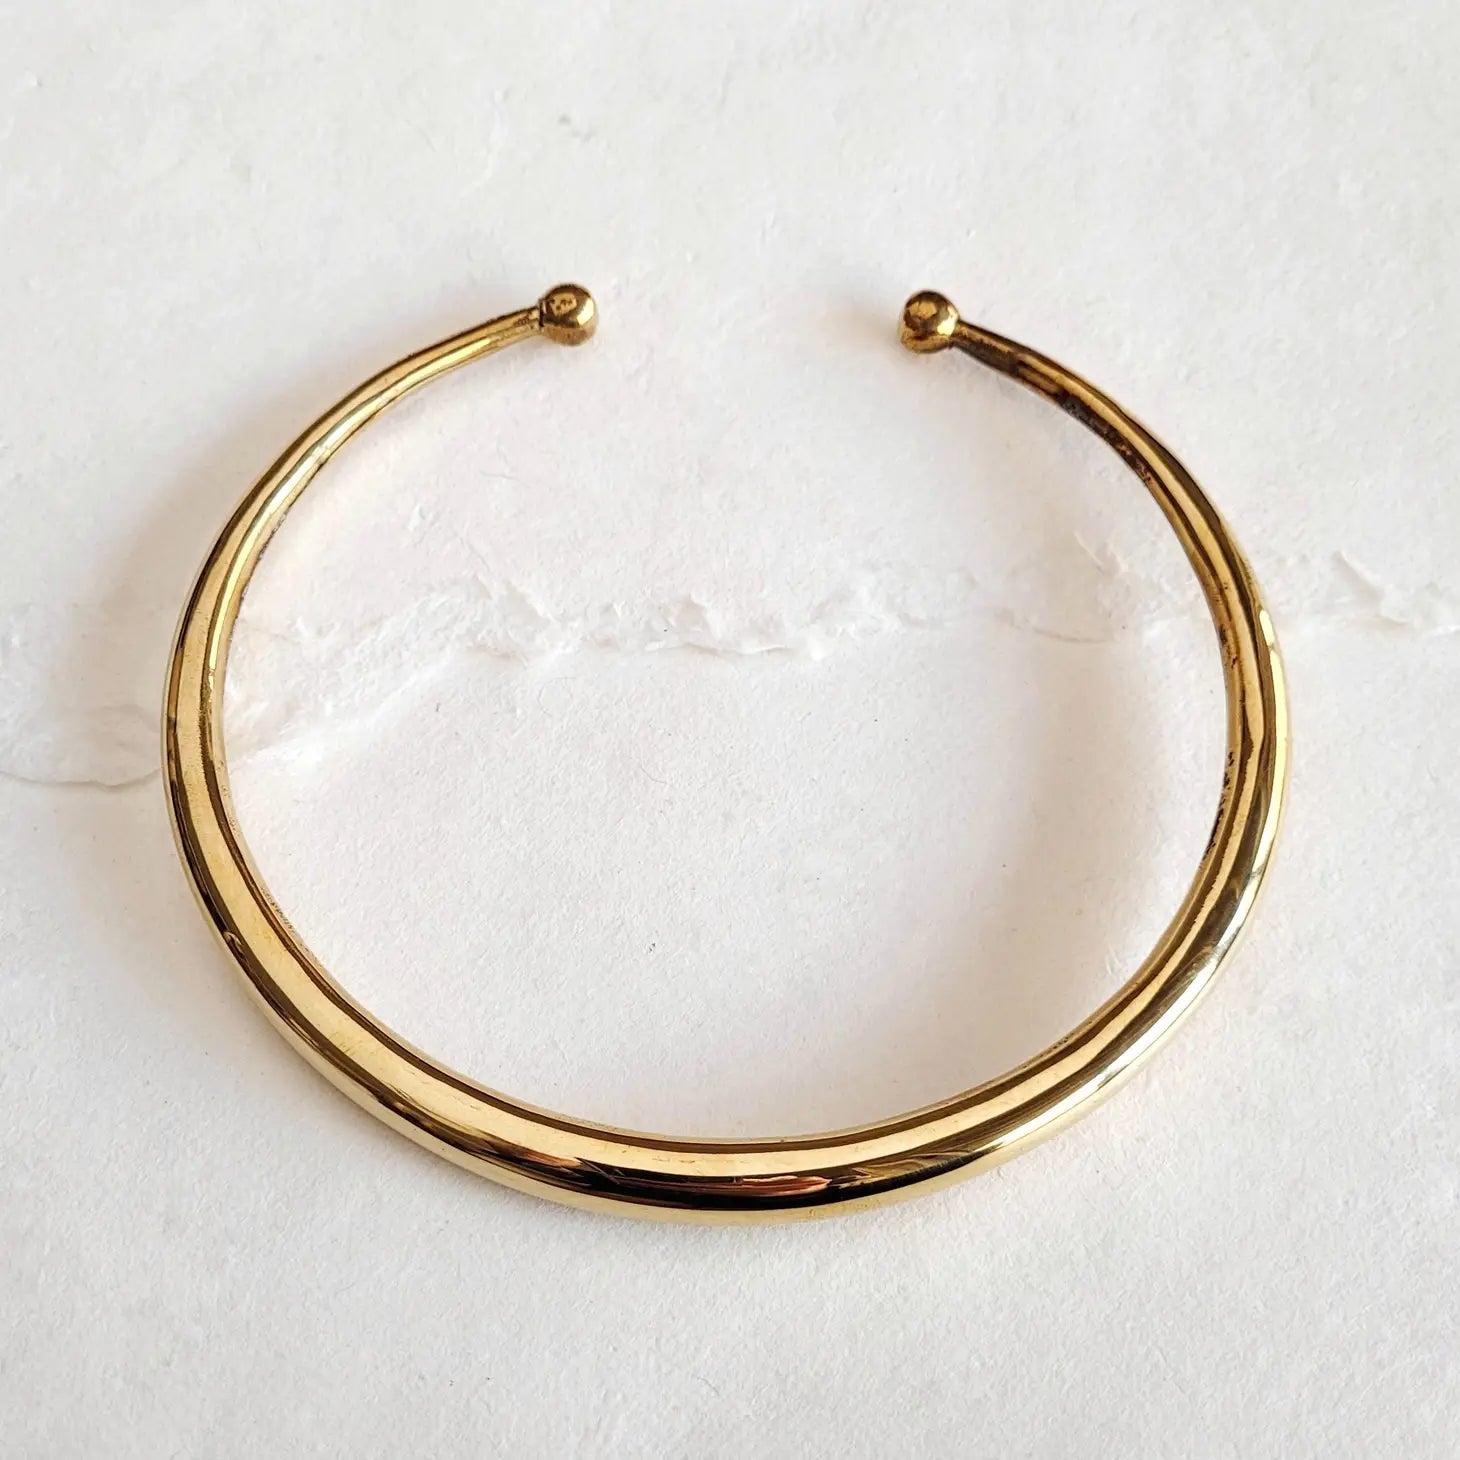 Brass Choker Collar Necklace - Moon Room Shop and Wellness